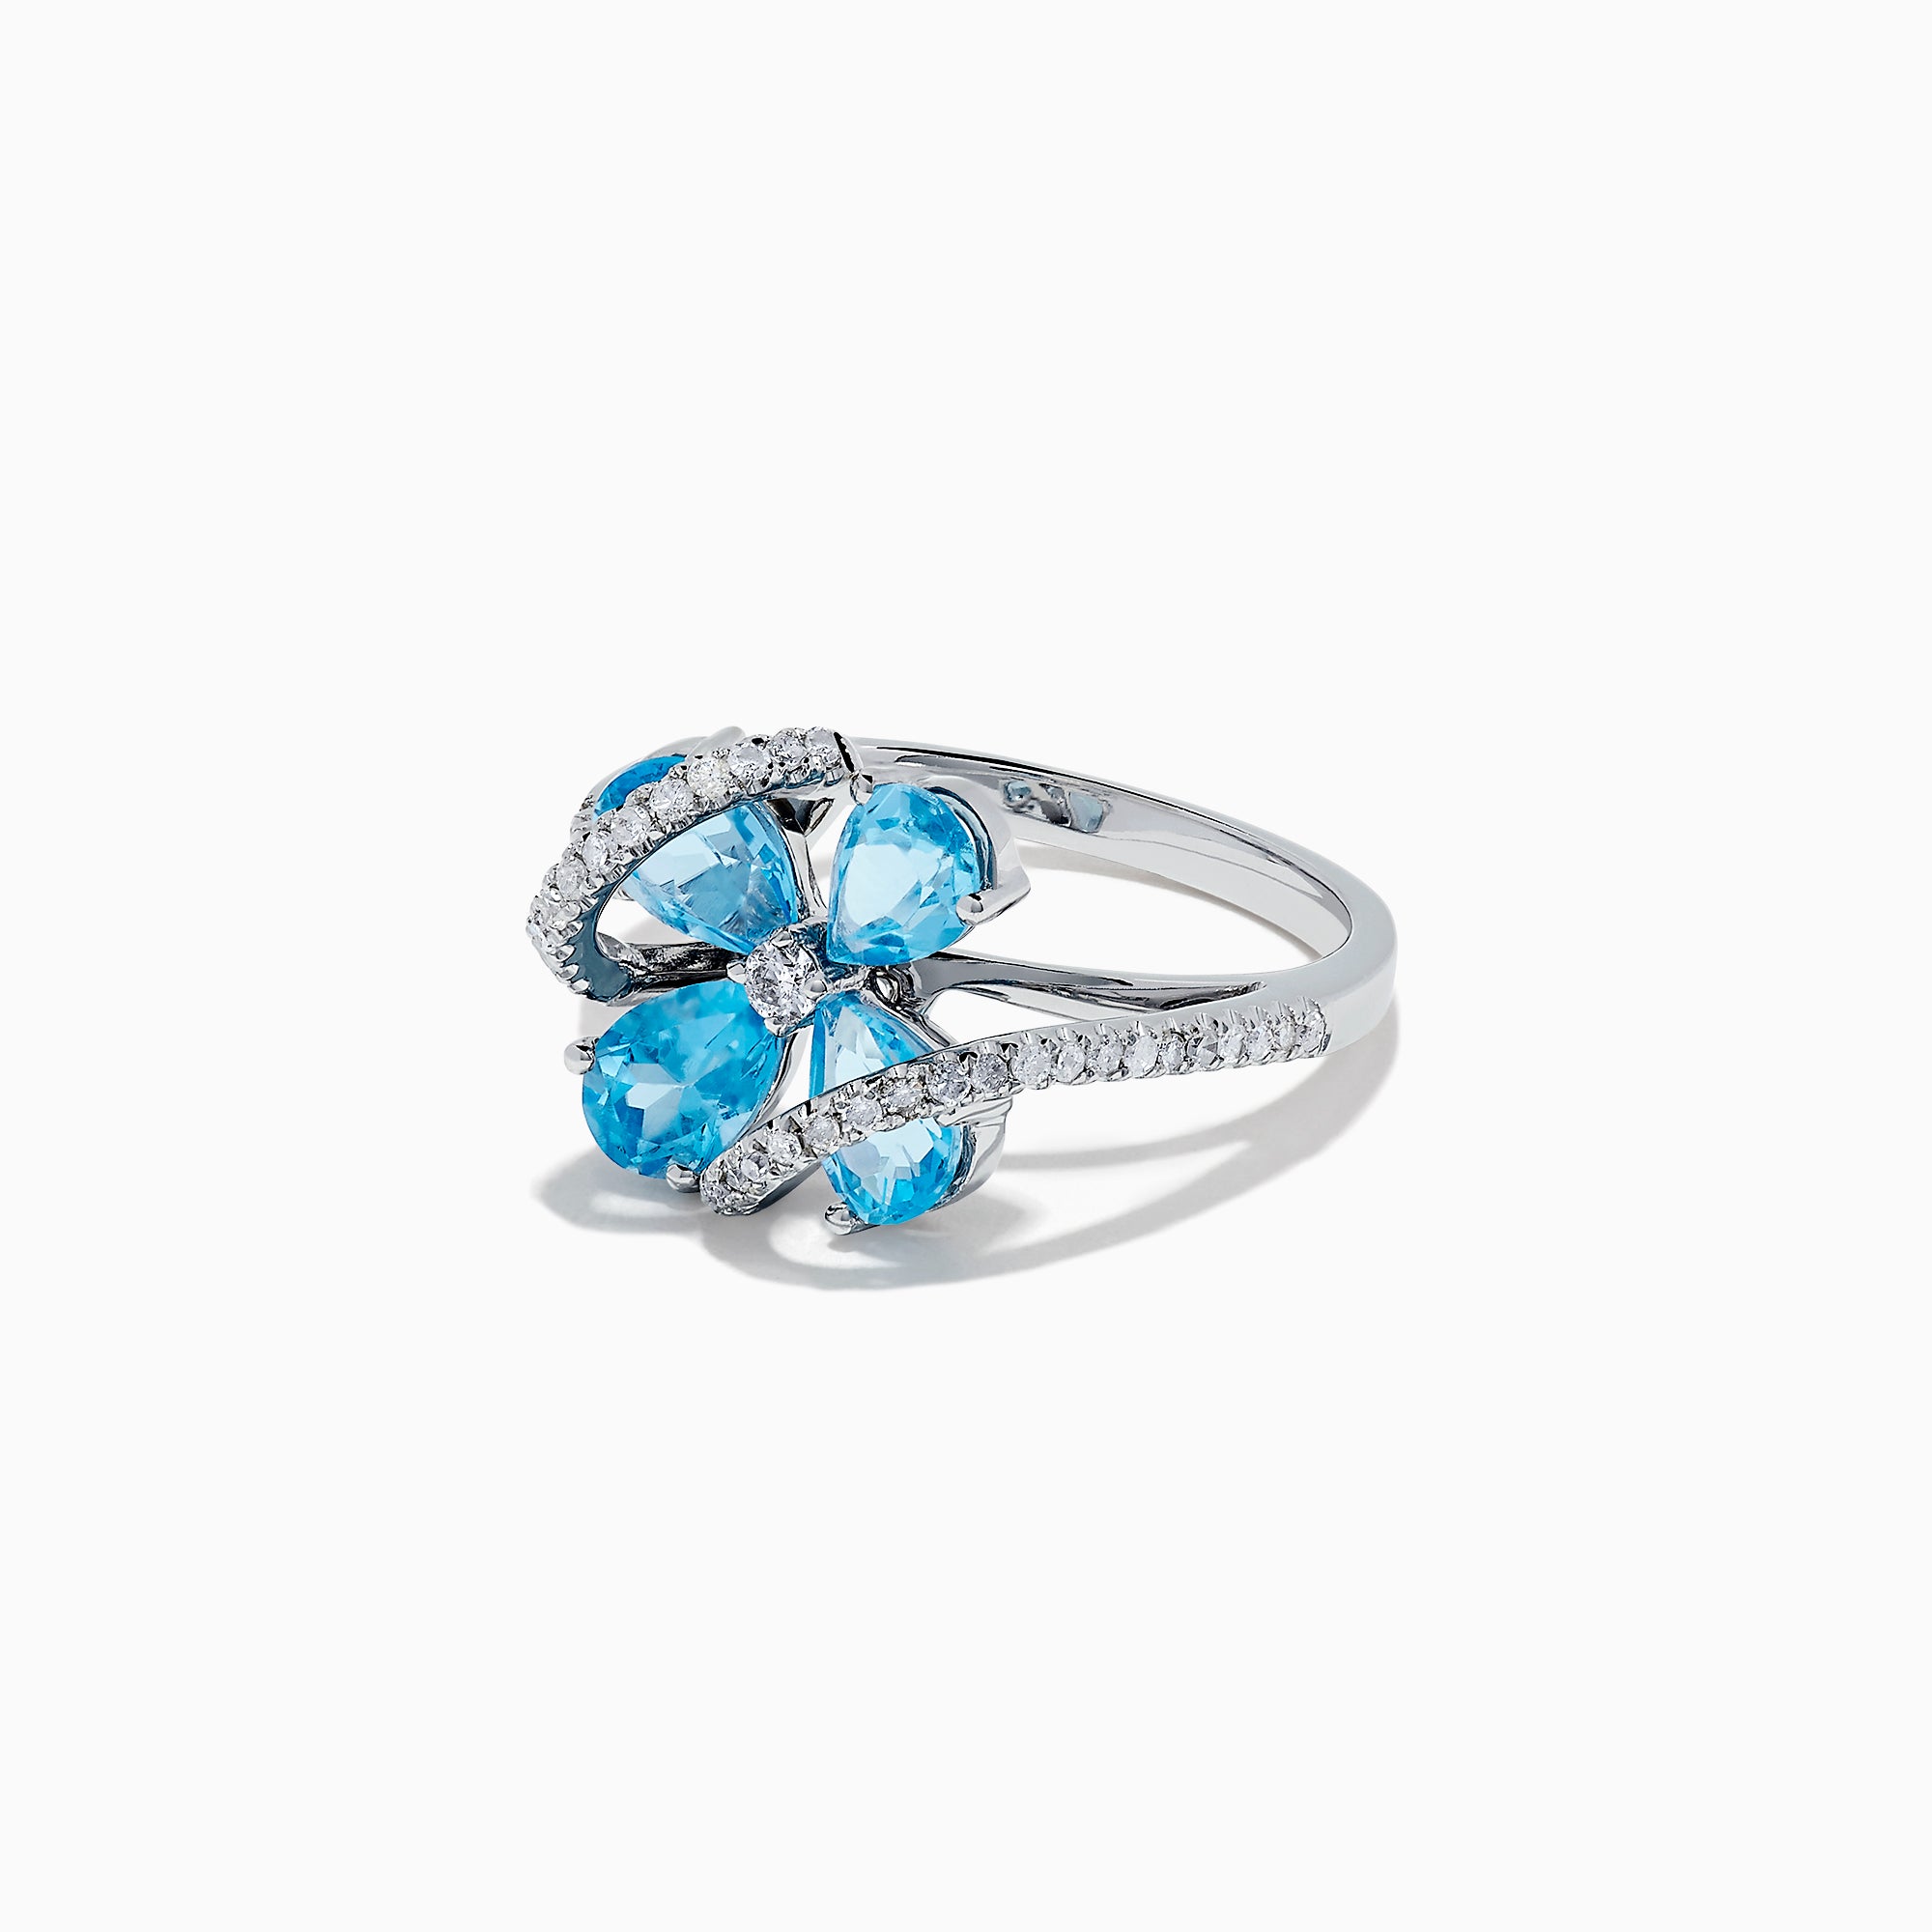 Effy Ocean Bleu 14K White Gold Blue Topaz and Diamond Ring, 1.88 TCW